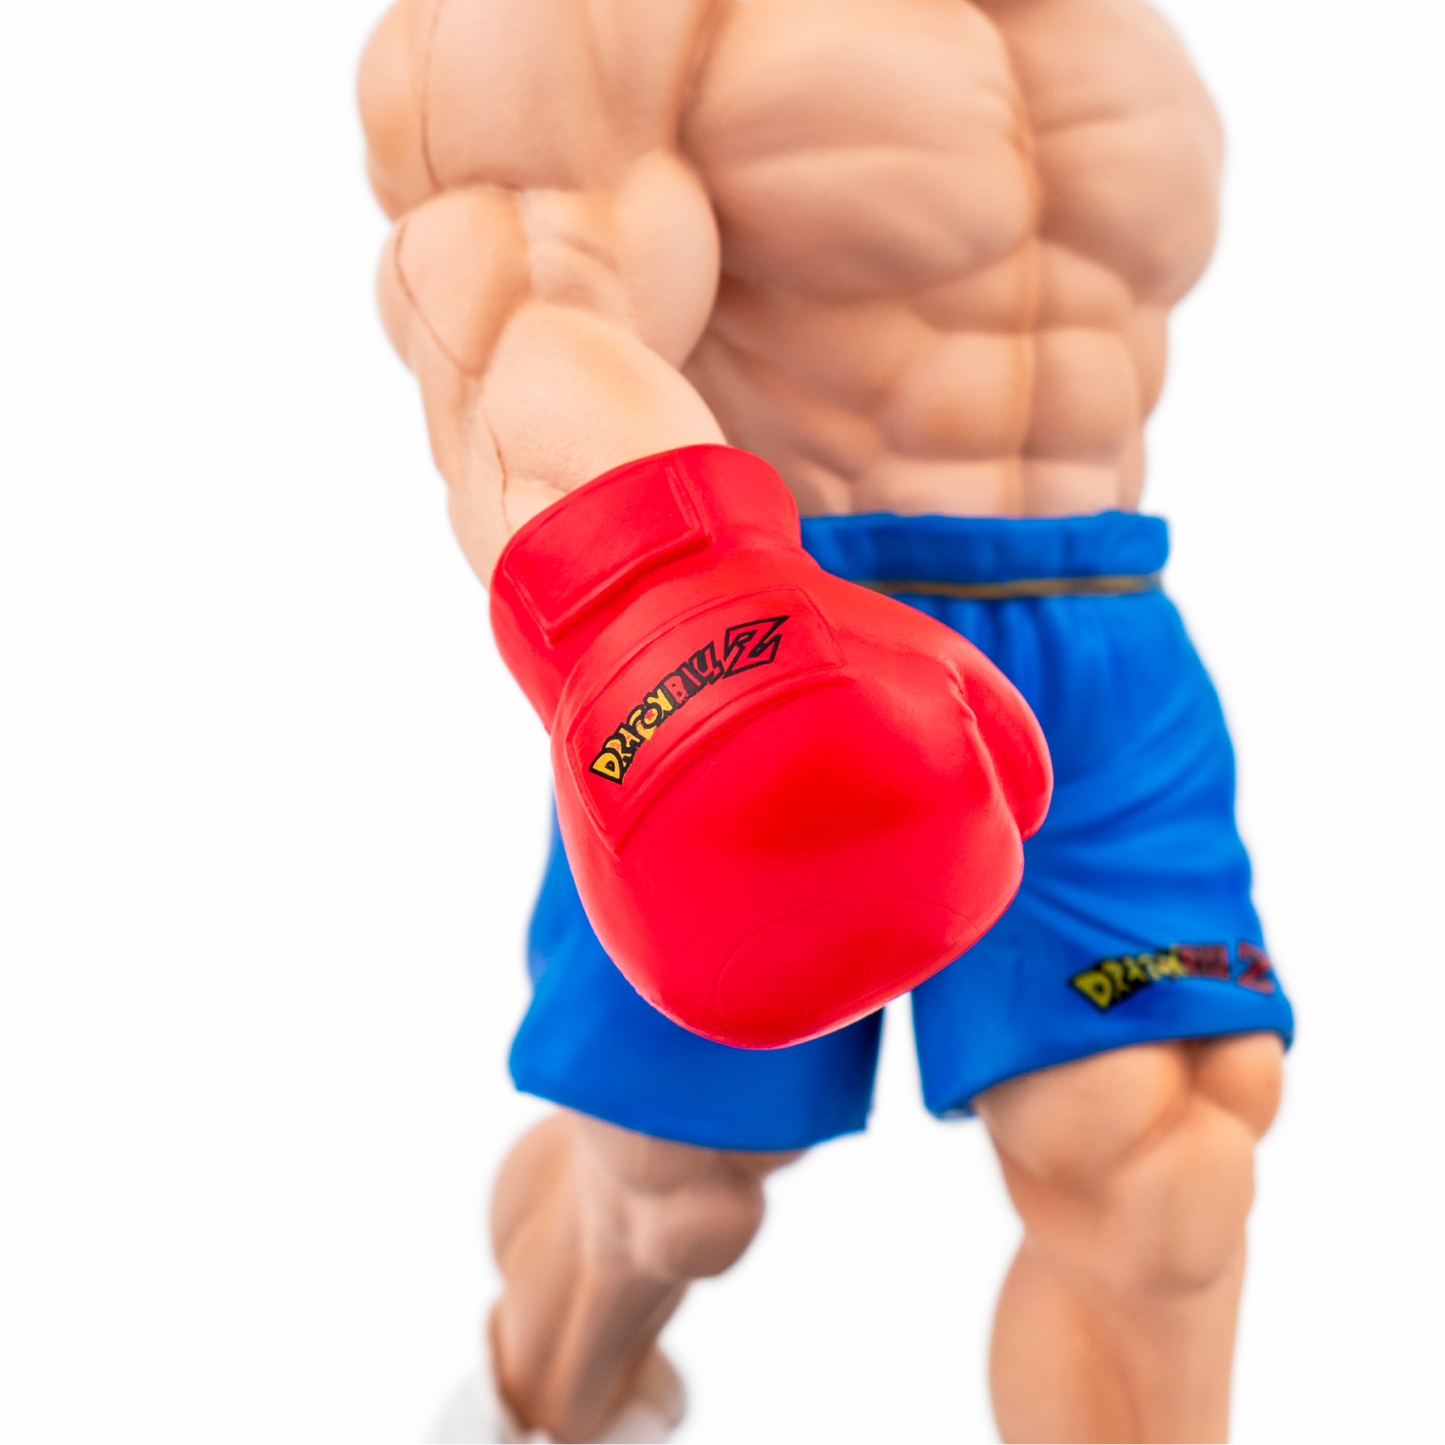 DBZ Figurine Gohan Boxing